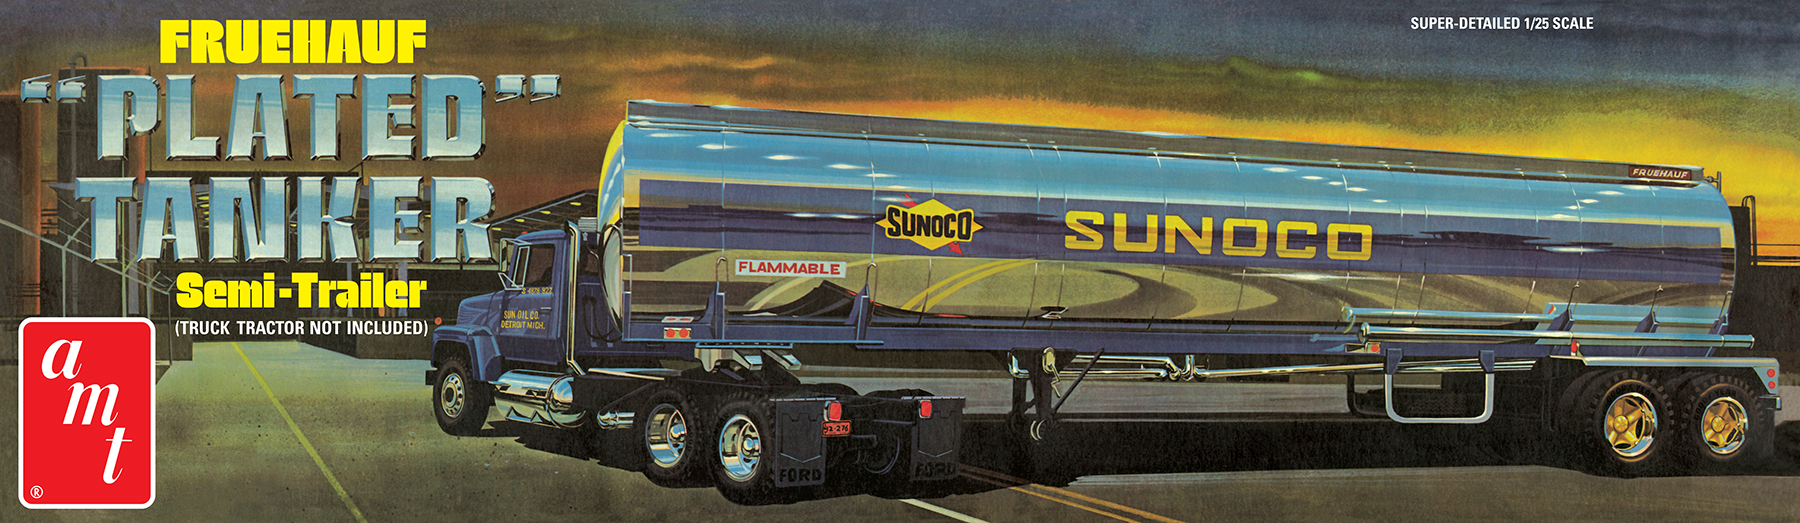 Sunoco Fruehauf Plated Tanker Semi-Trailer